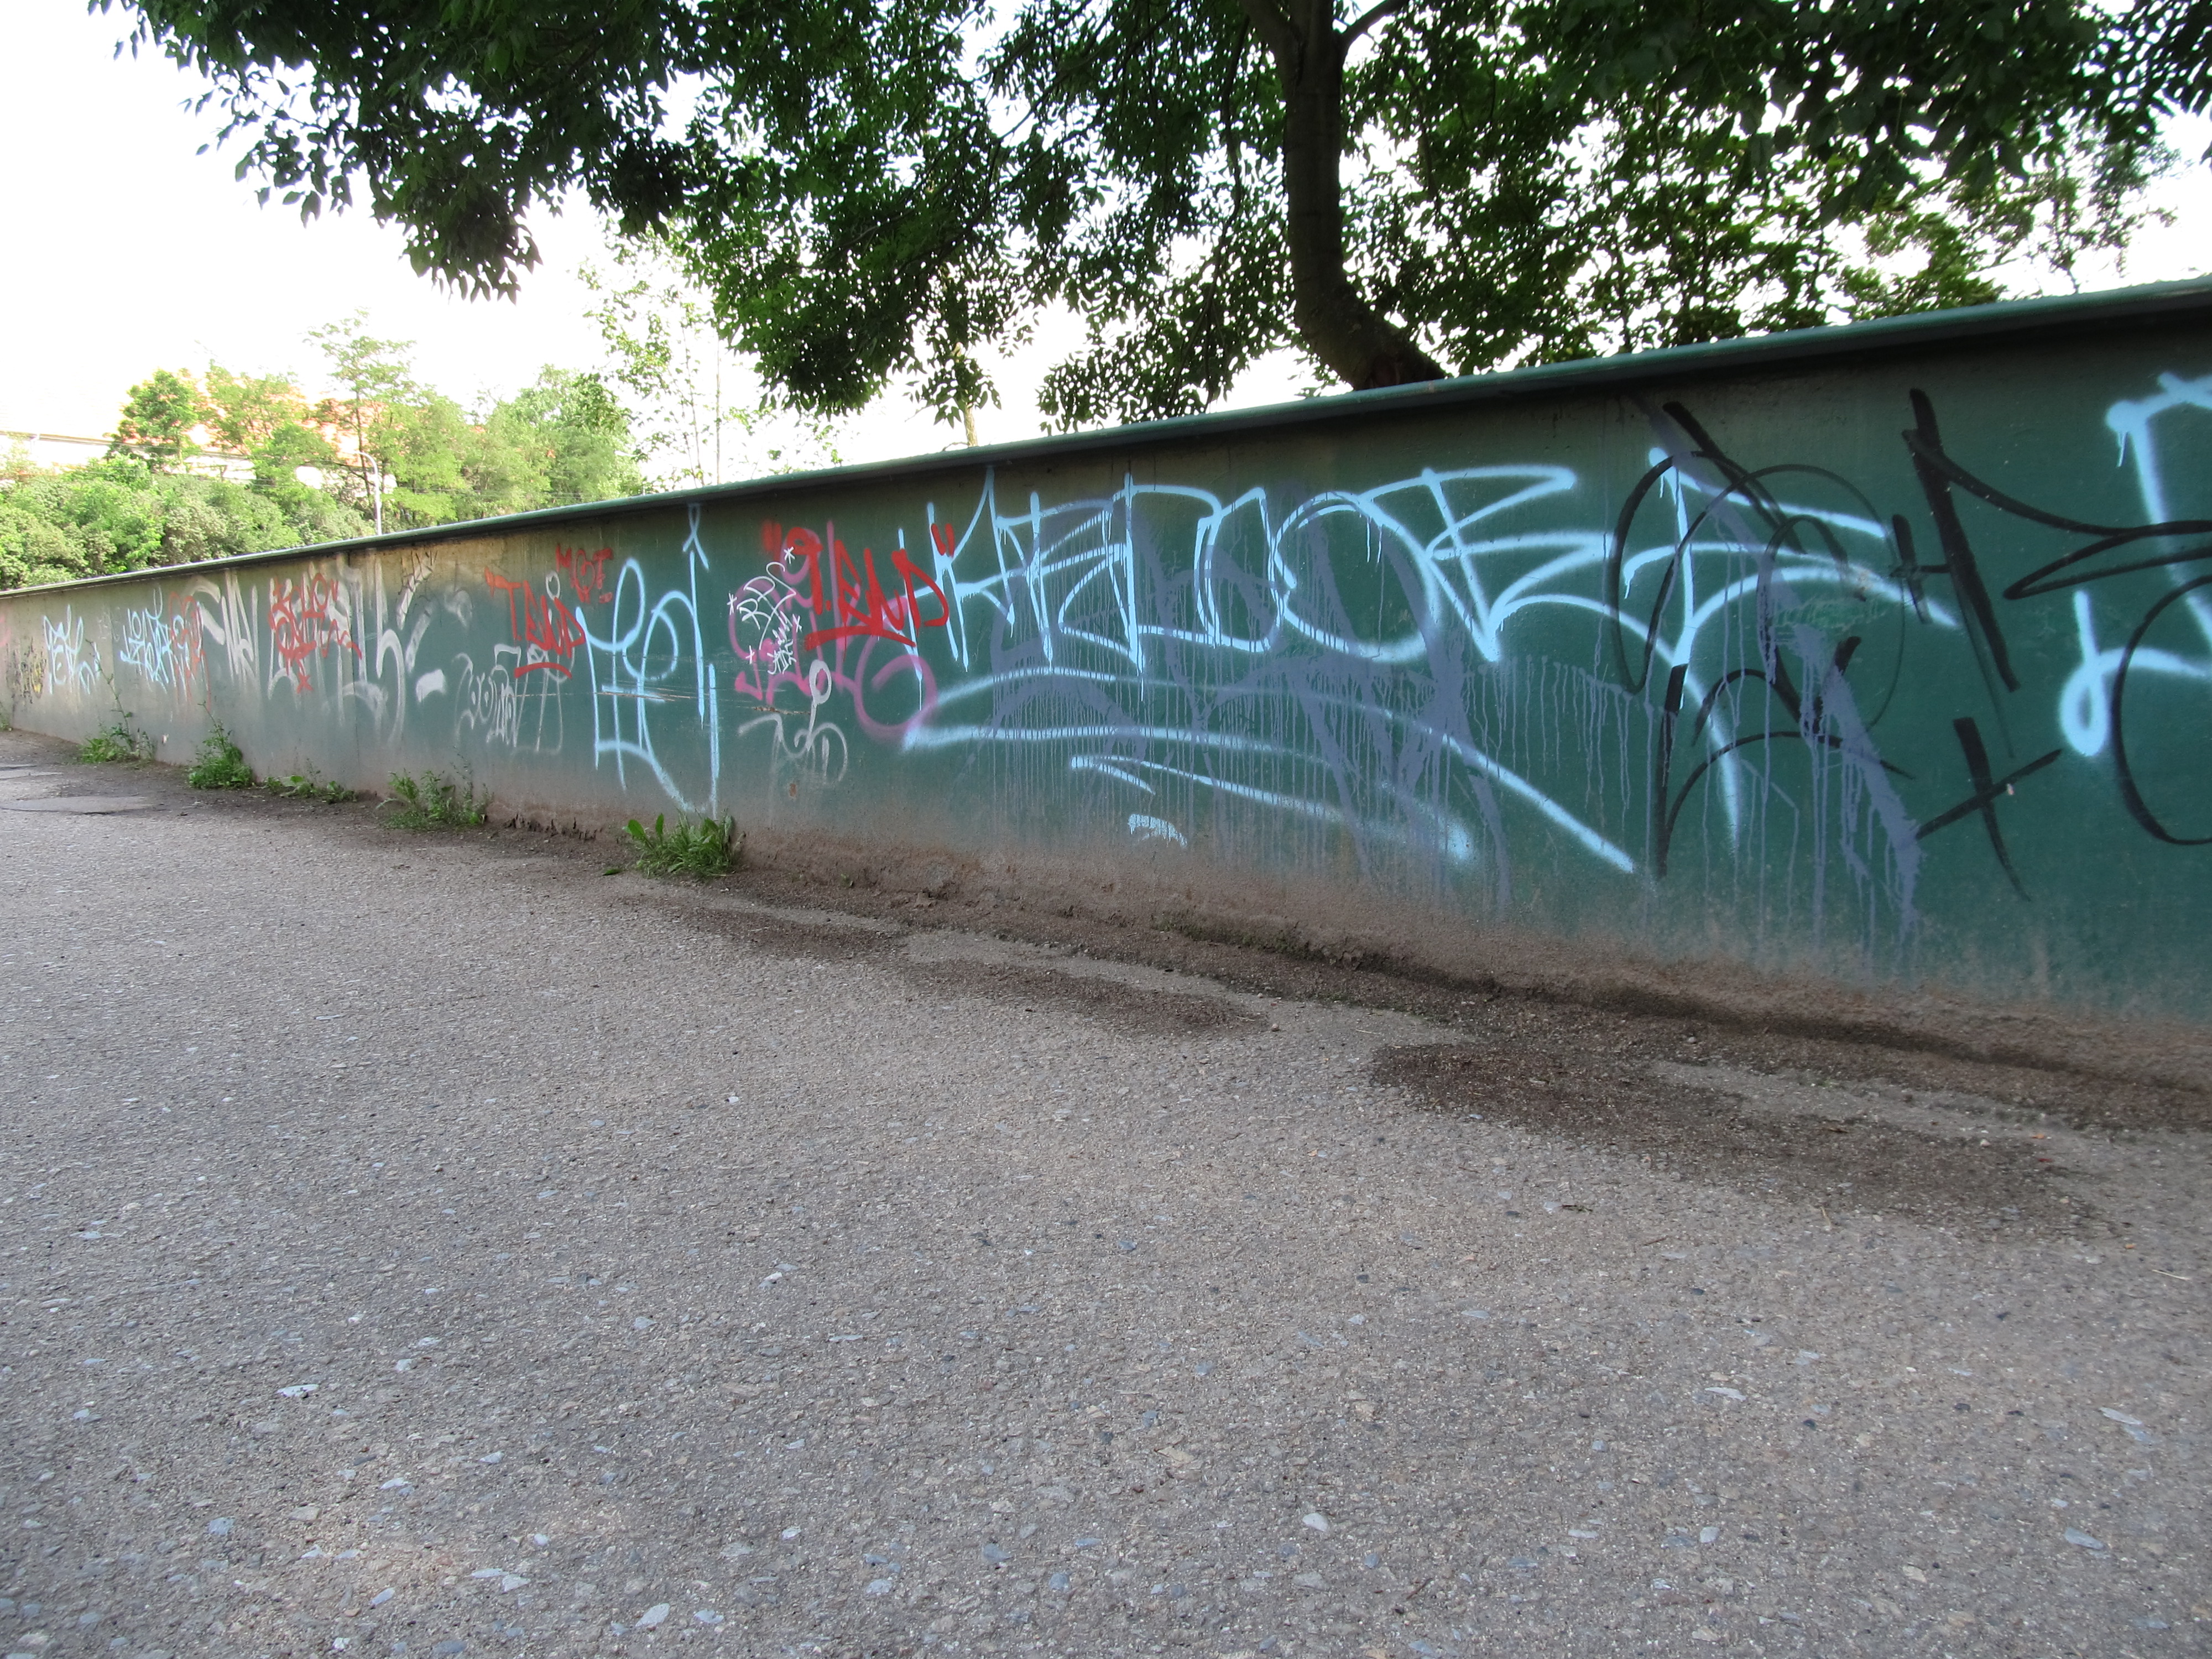 File:Graffiti on a bridge.JPG - Wikimedia Commons